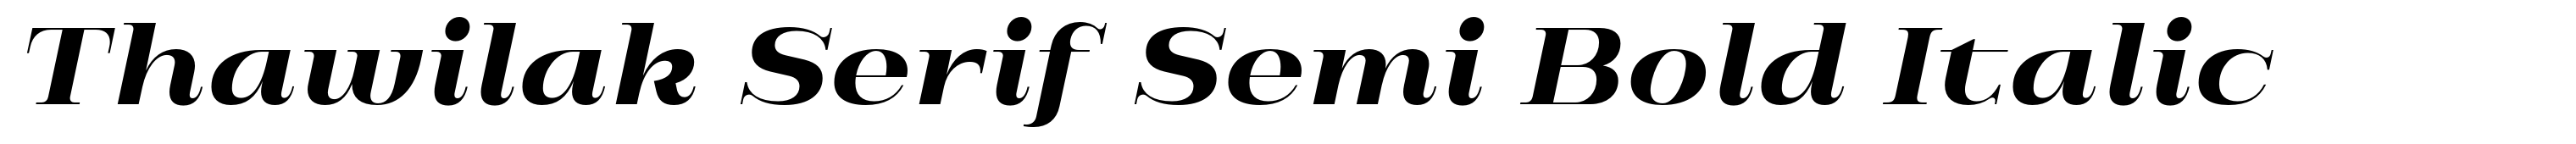 Thawilak Serif Semi Bold Italic